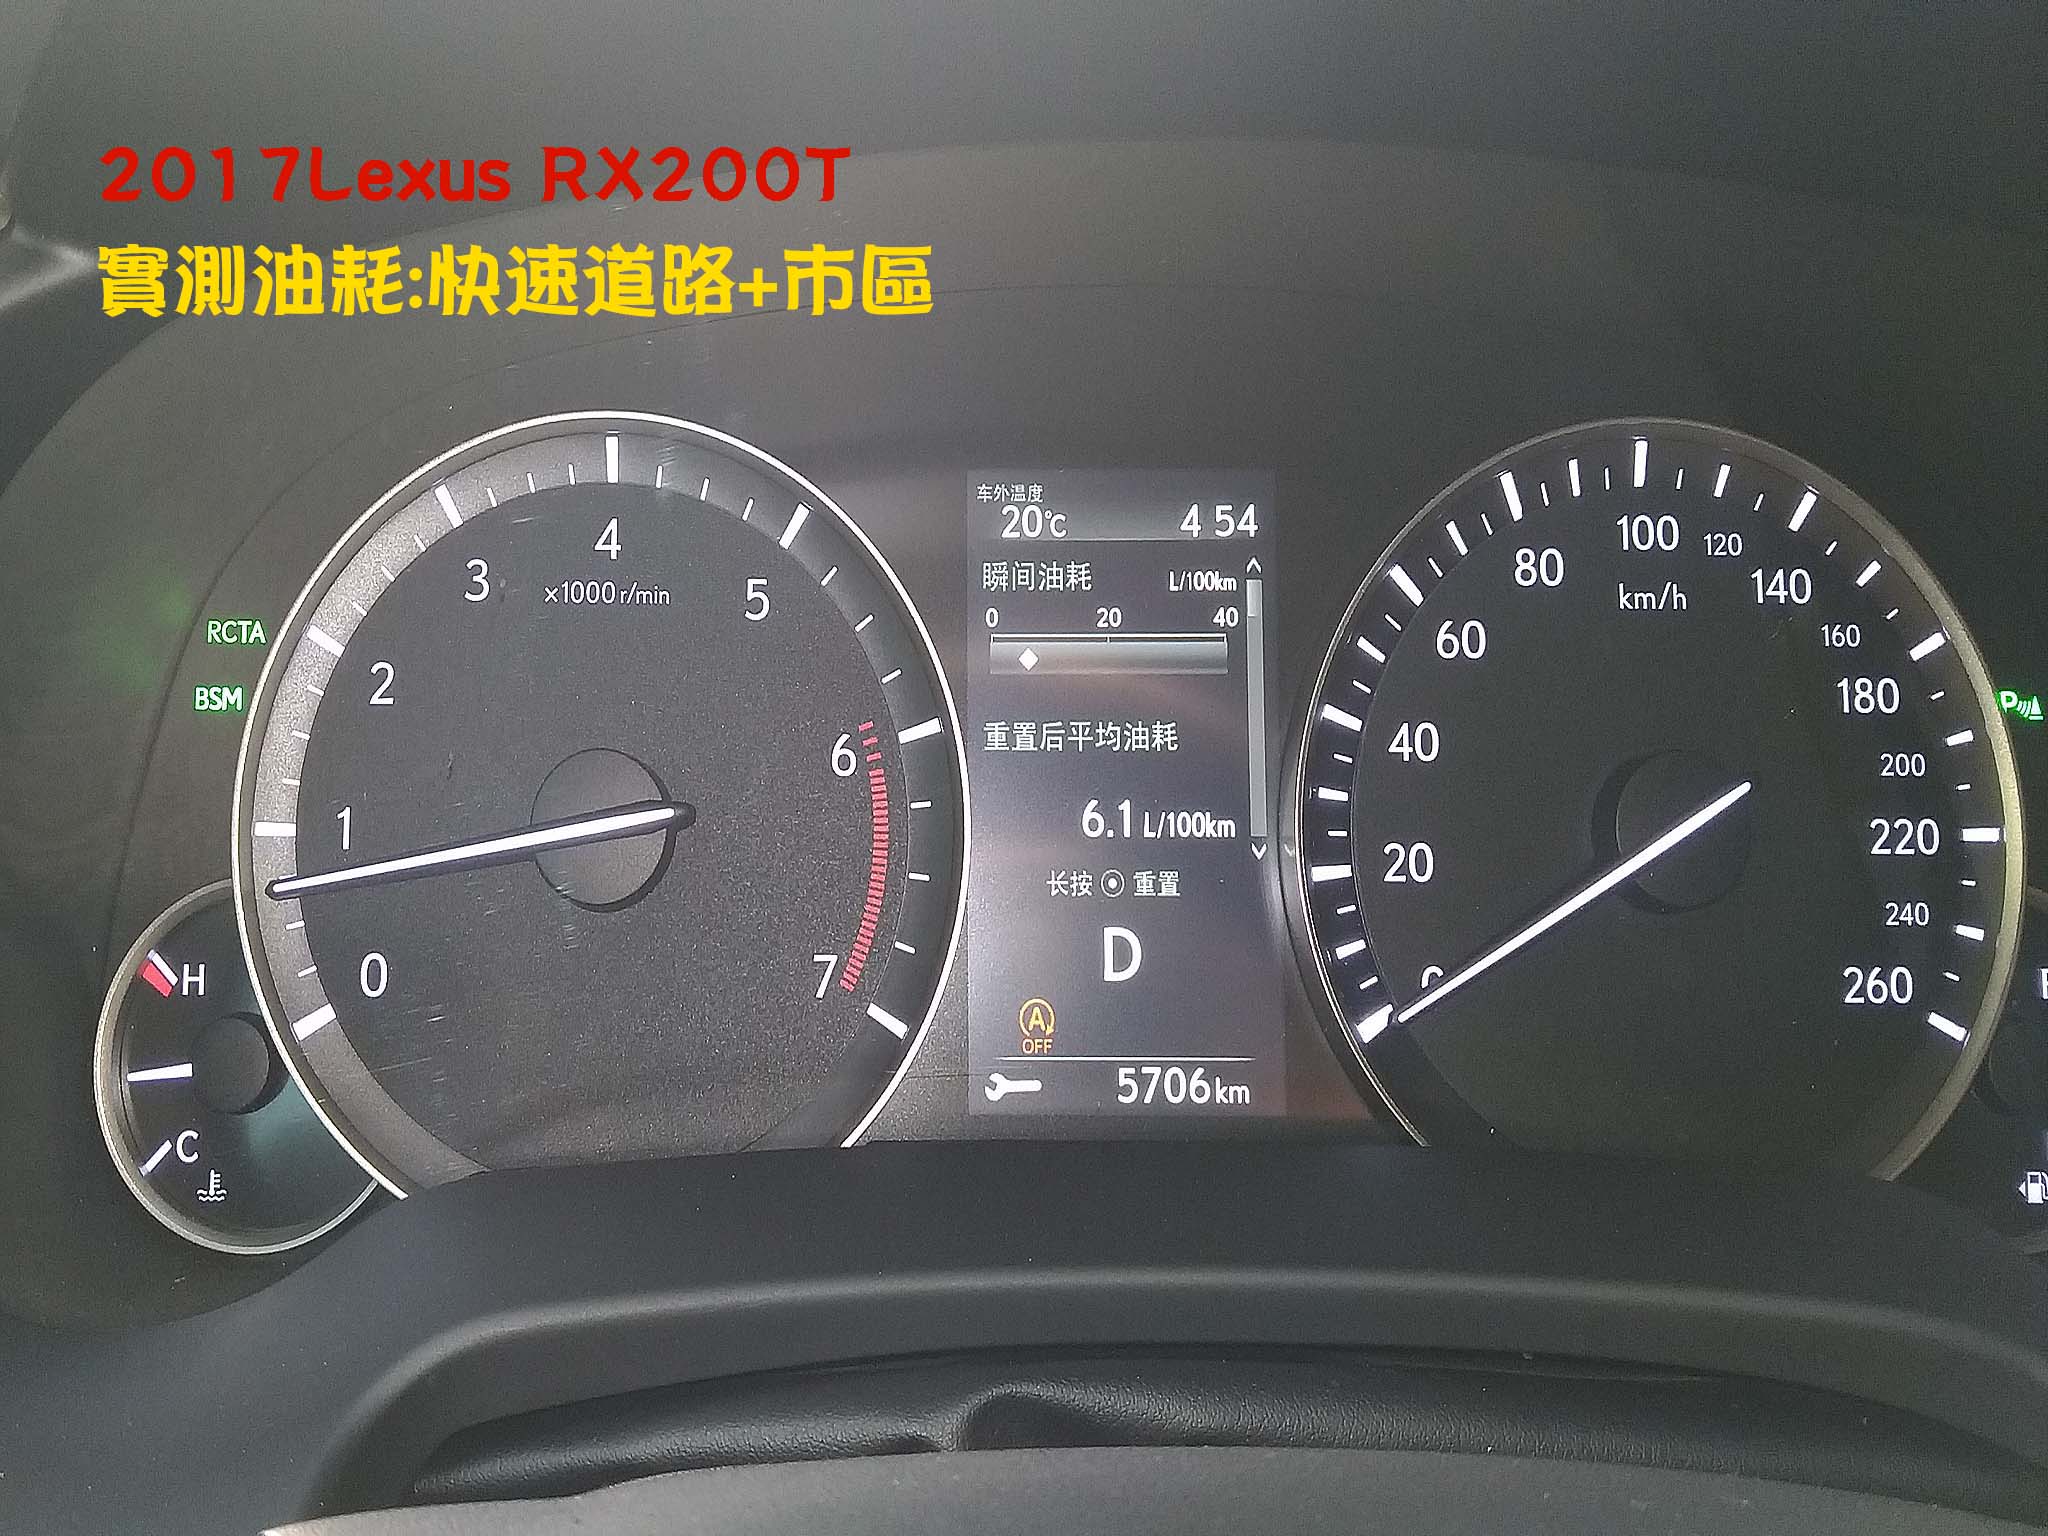 2017 RX200T快速道路油耗